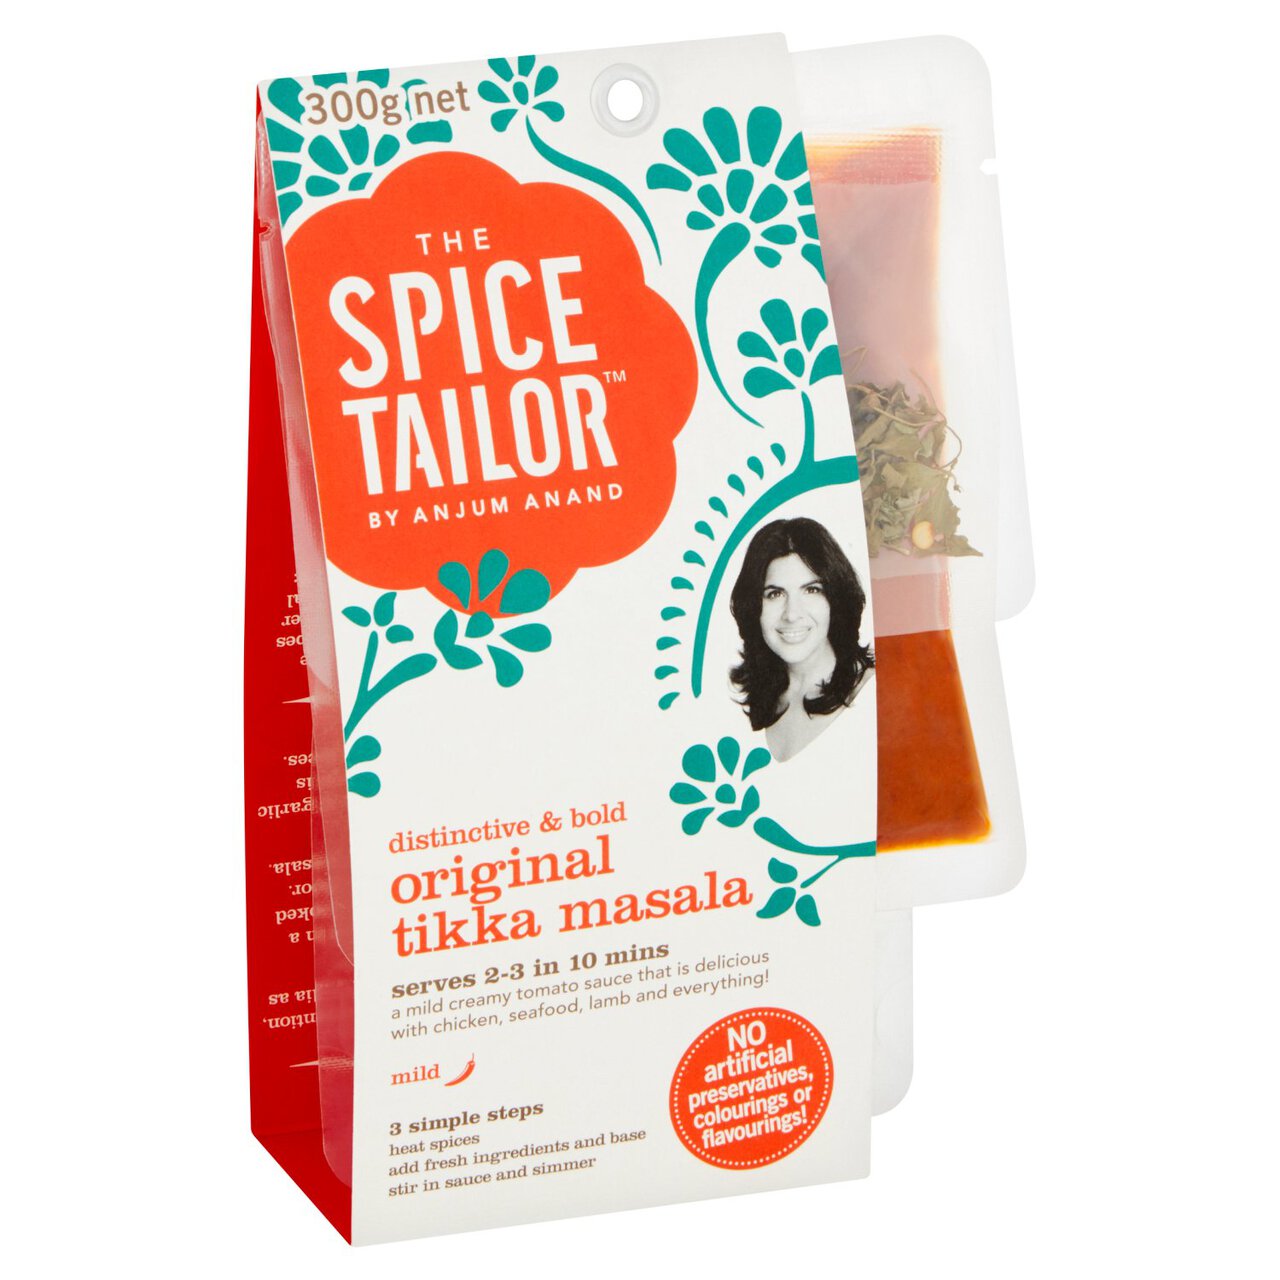 The Spice Tailor Original Tikka Masala Curry Kit 300g